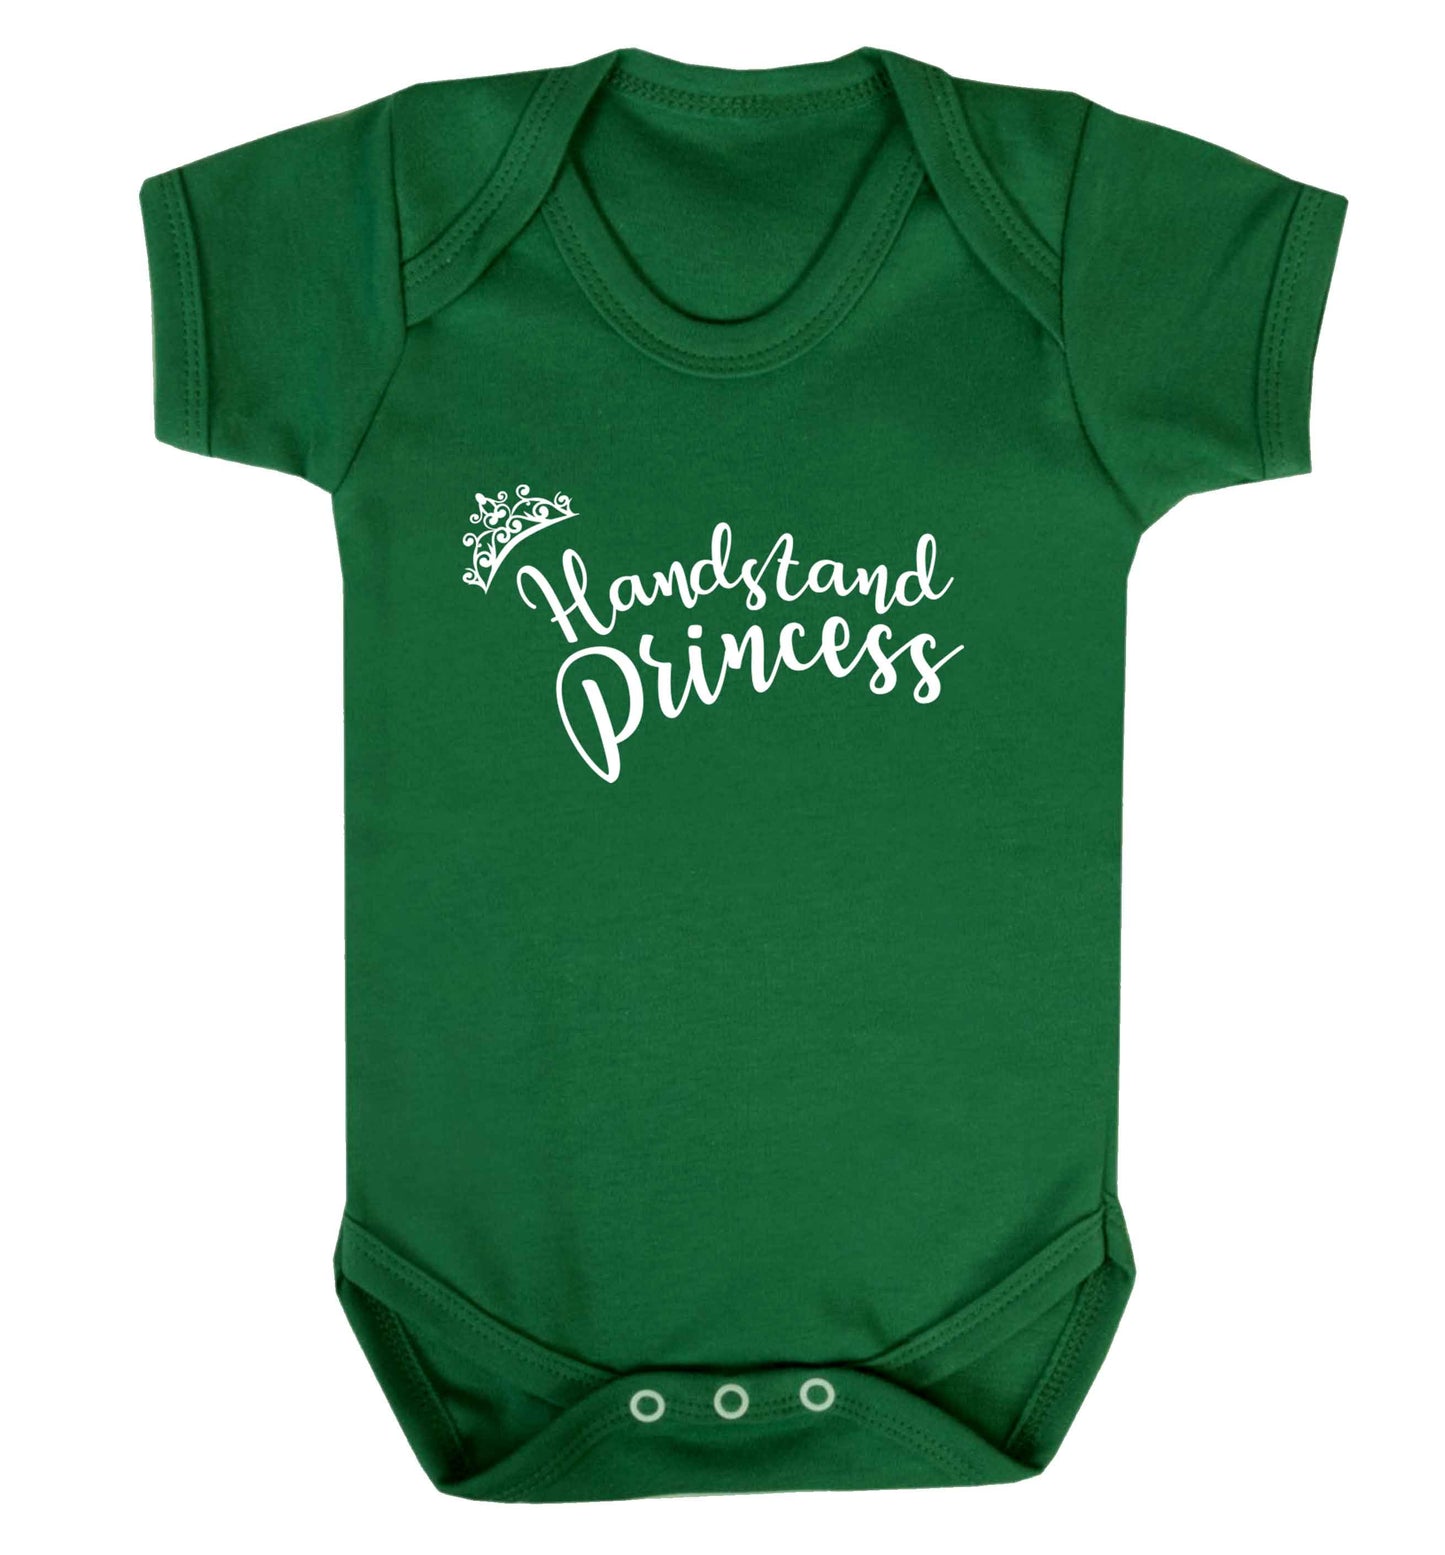 Handstand princess Baby Vest green 18-24 months